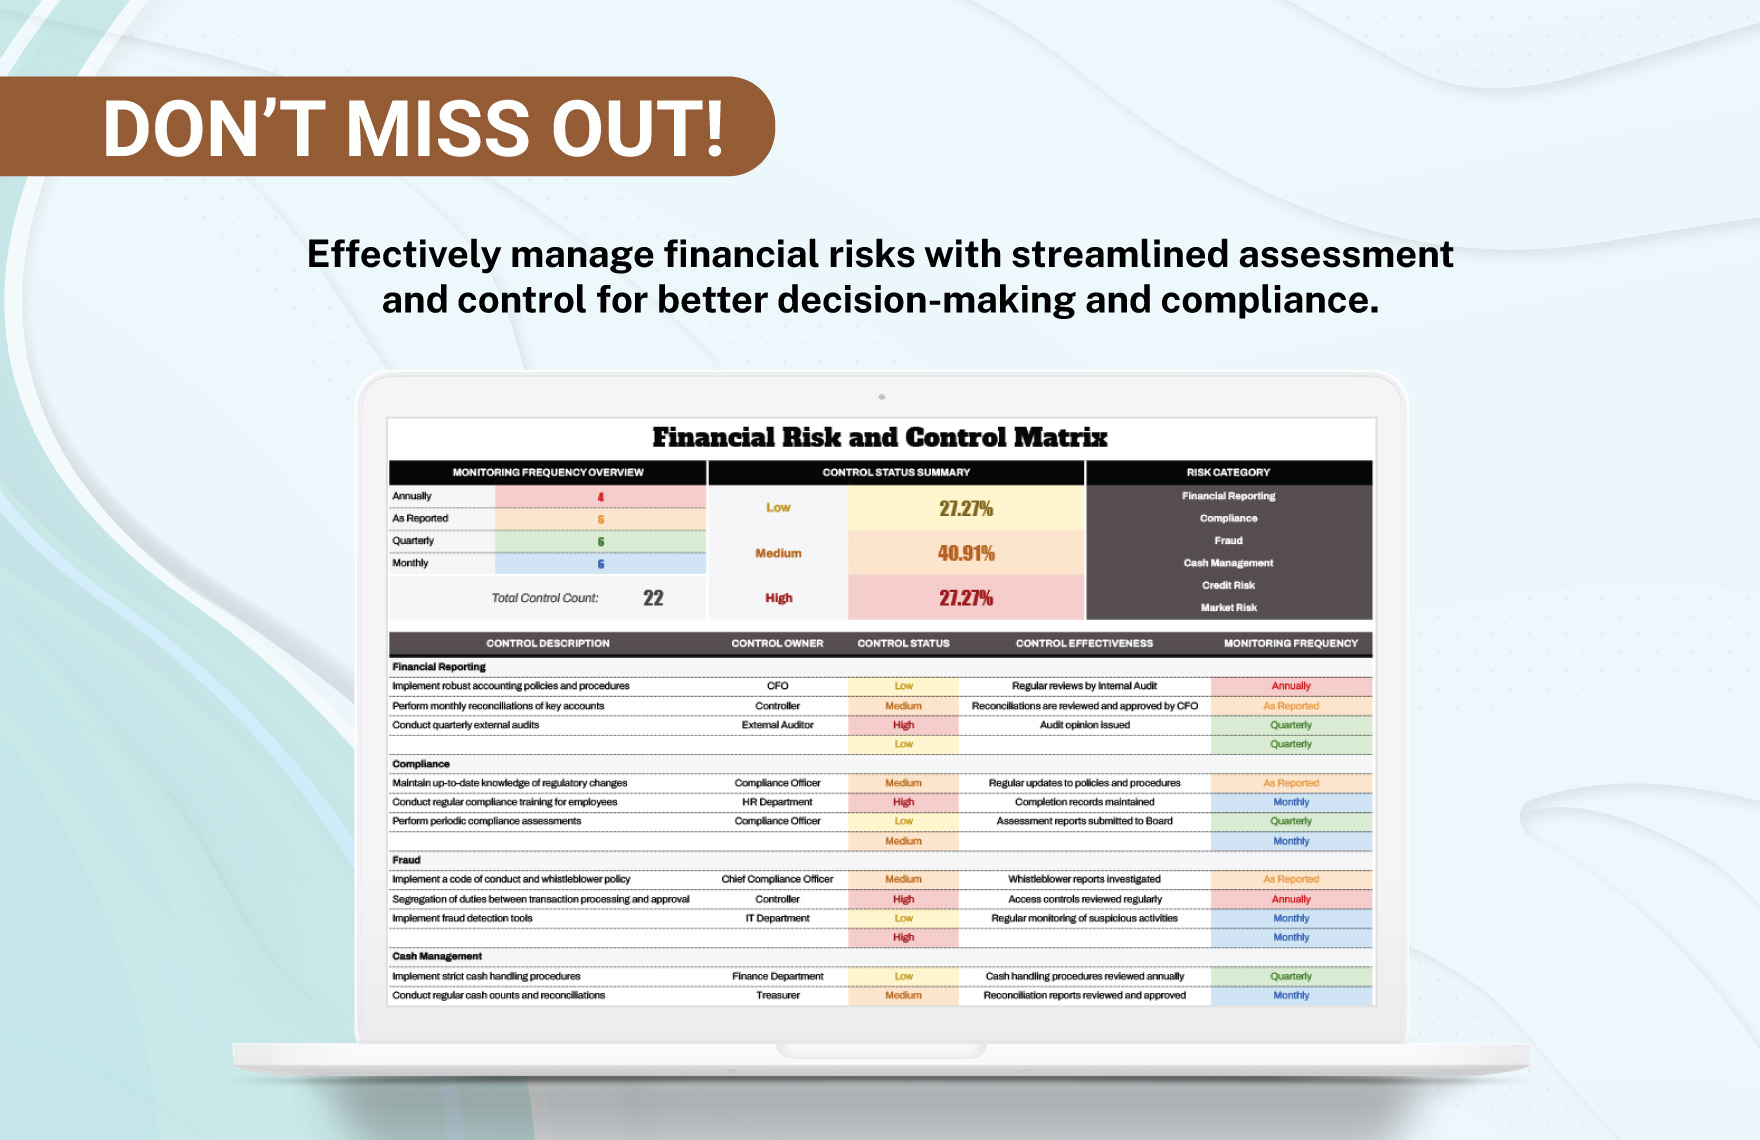 Financial Risk and Control Matrix Template